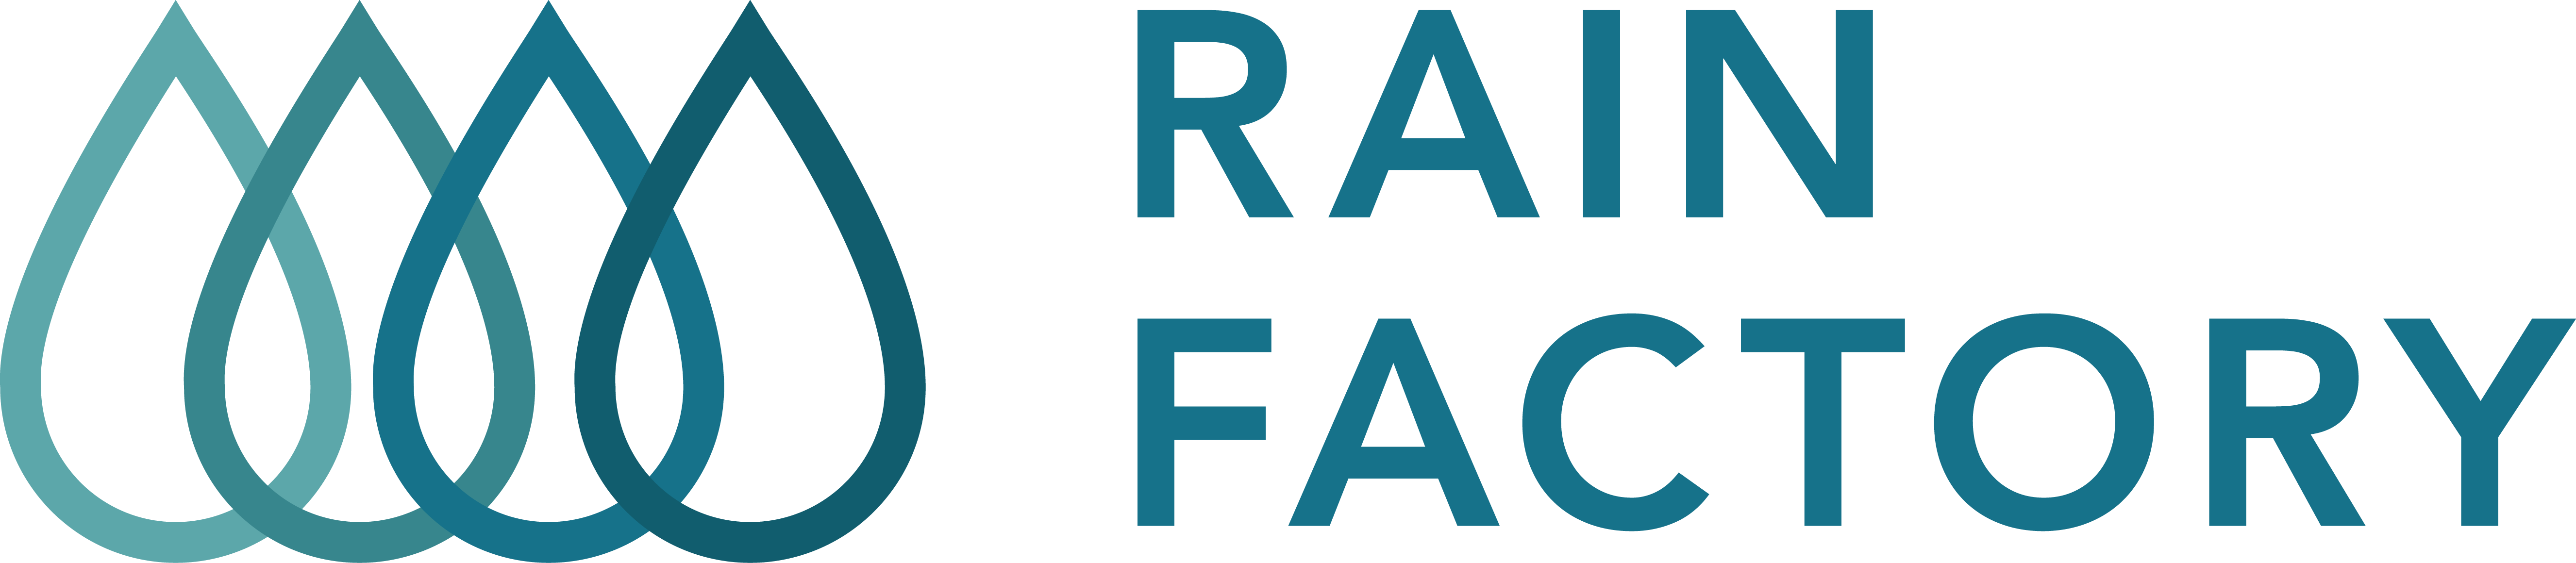 Rainfactory Logo